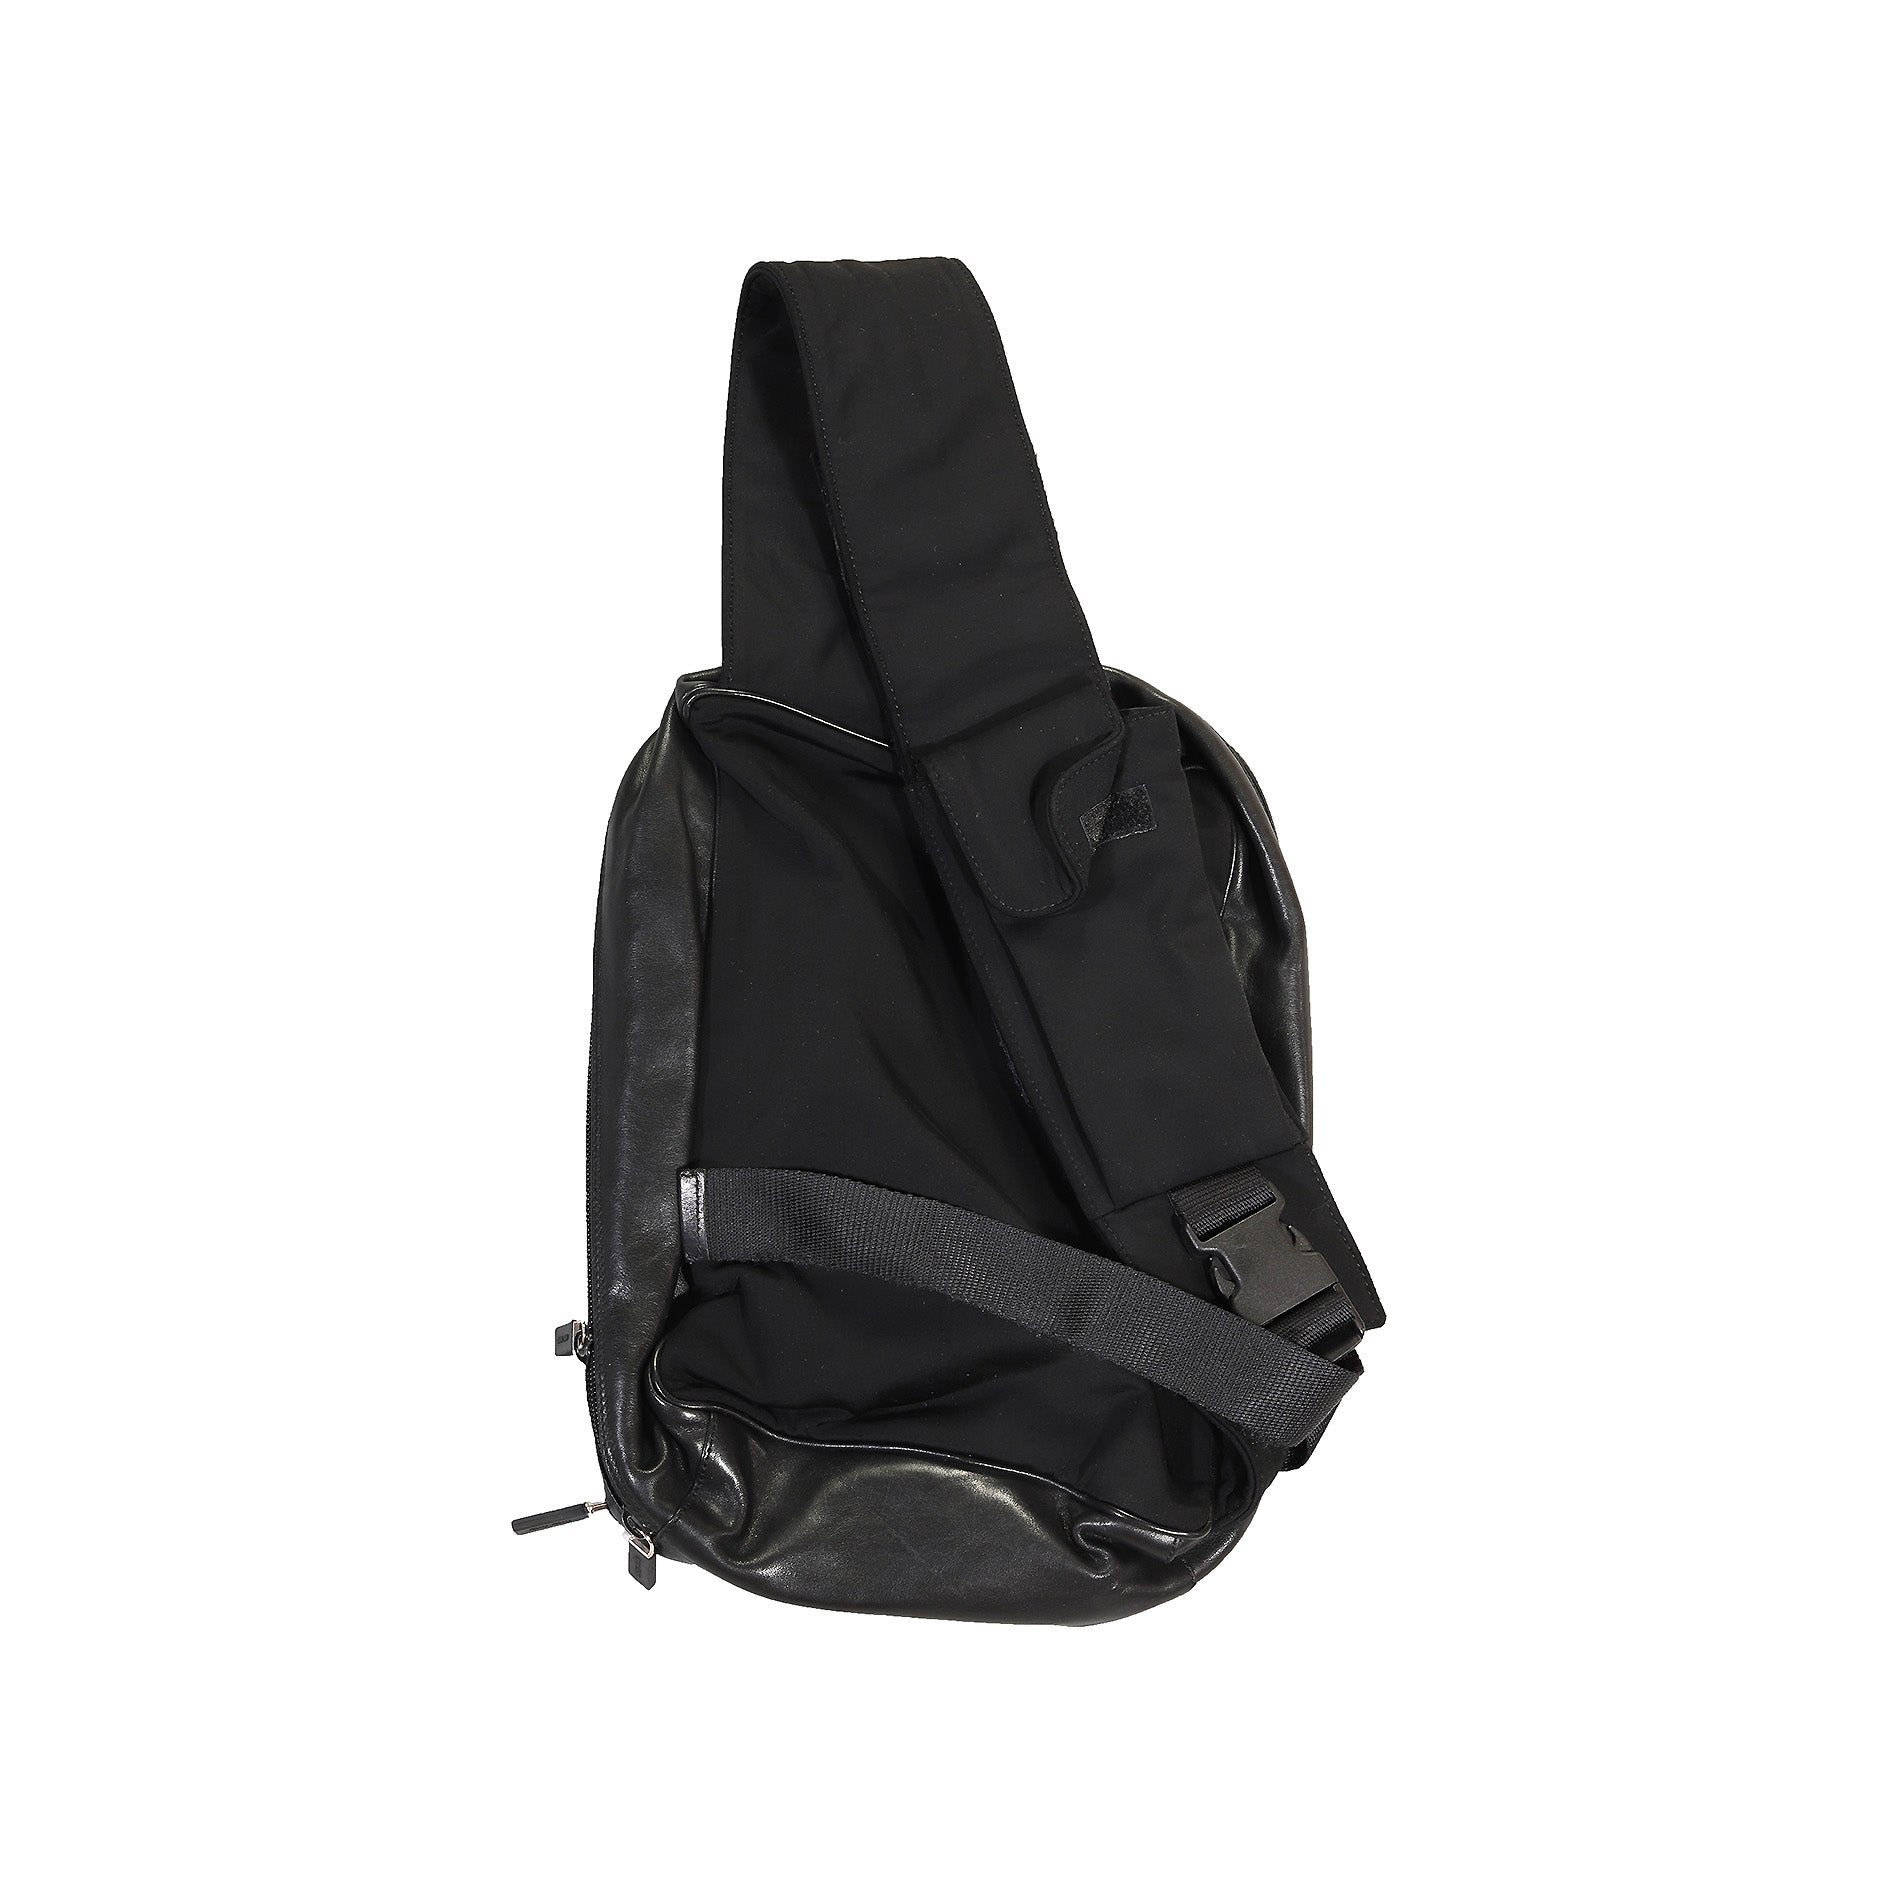 Miu Miu FW99 Black Leather Utility Backpack - Ākaibu Store